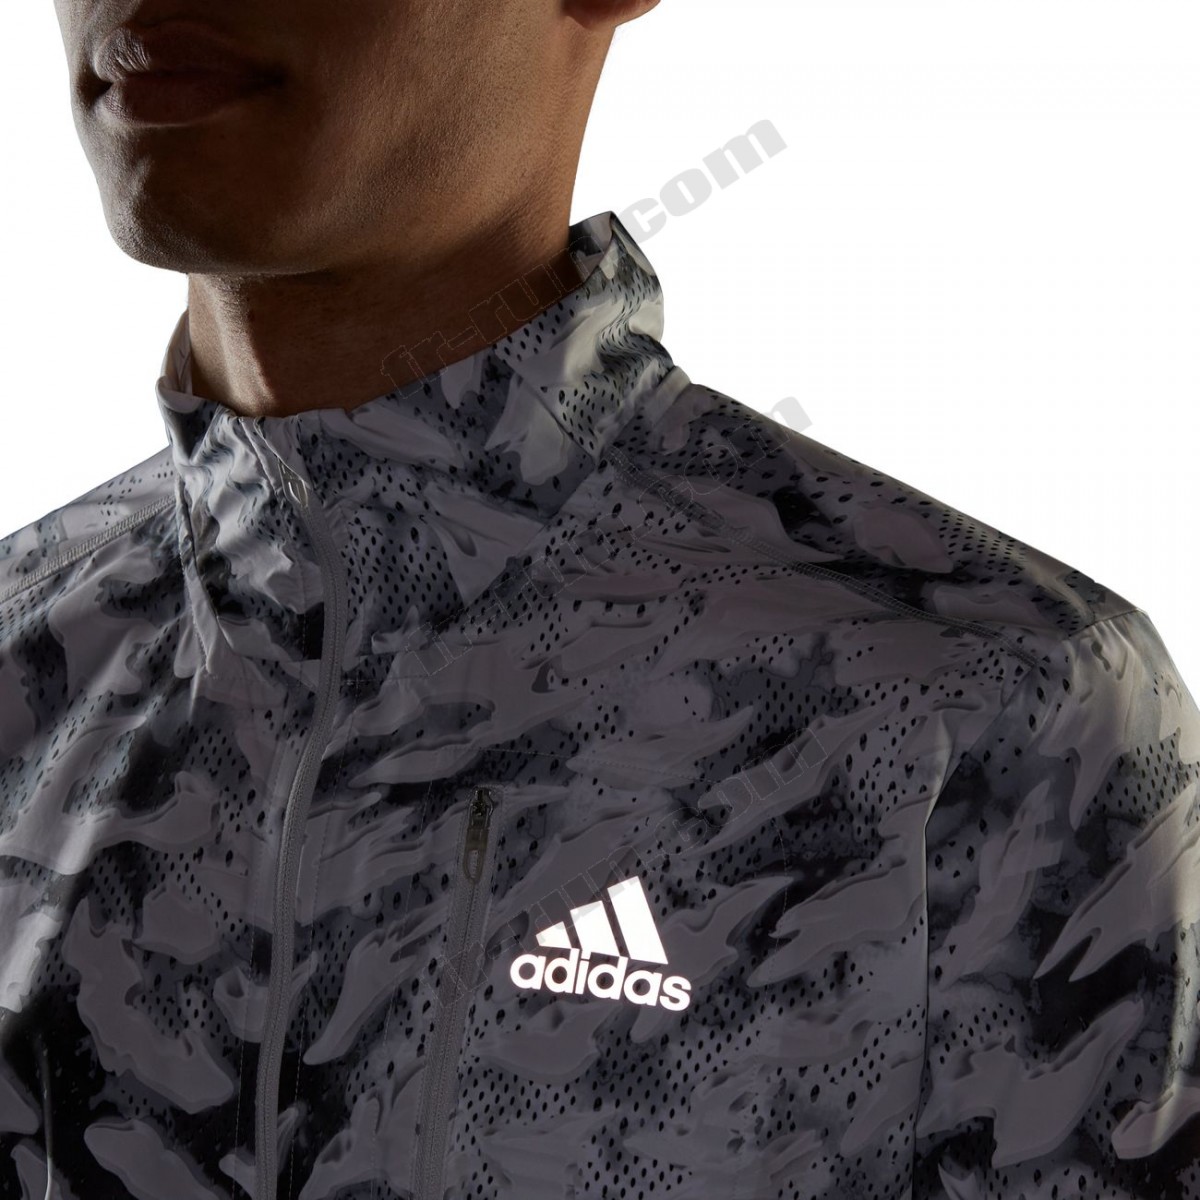 Adidas/running homme ADIDAS Adidas Fast Graphic Primeblue ◇◇◇ Pas Cher Du Tout - -8